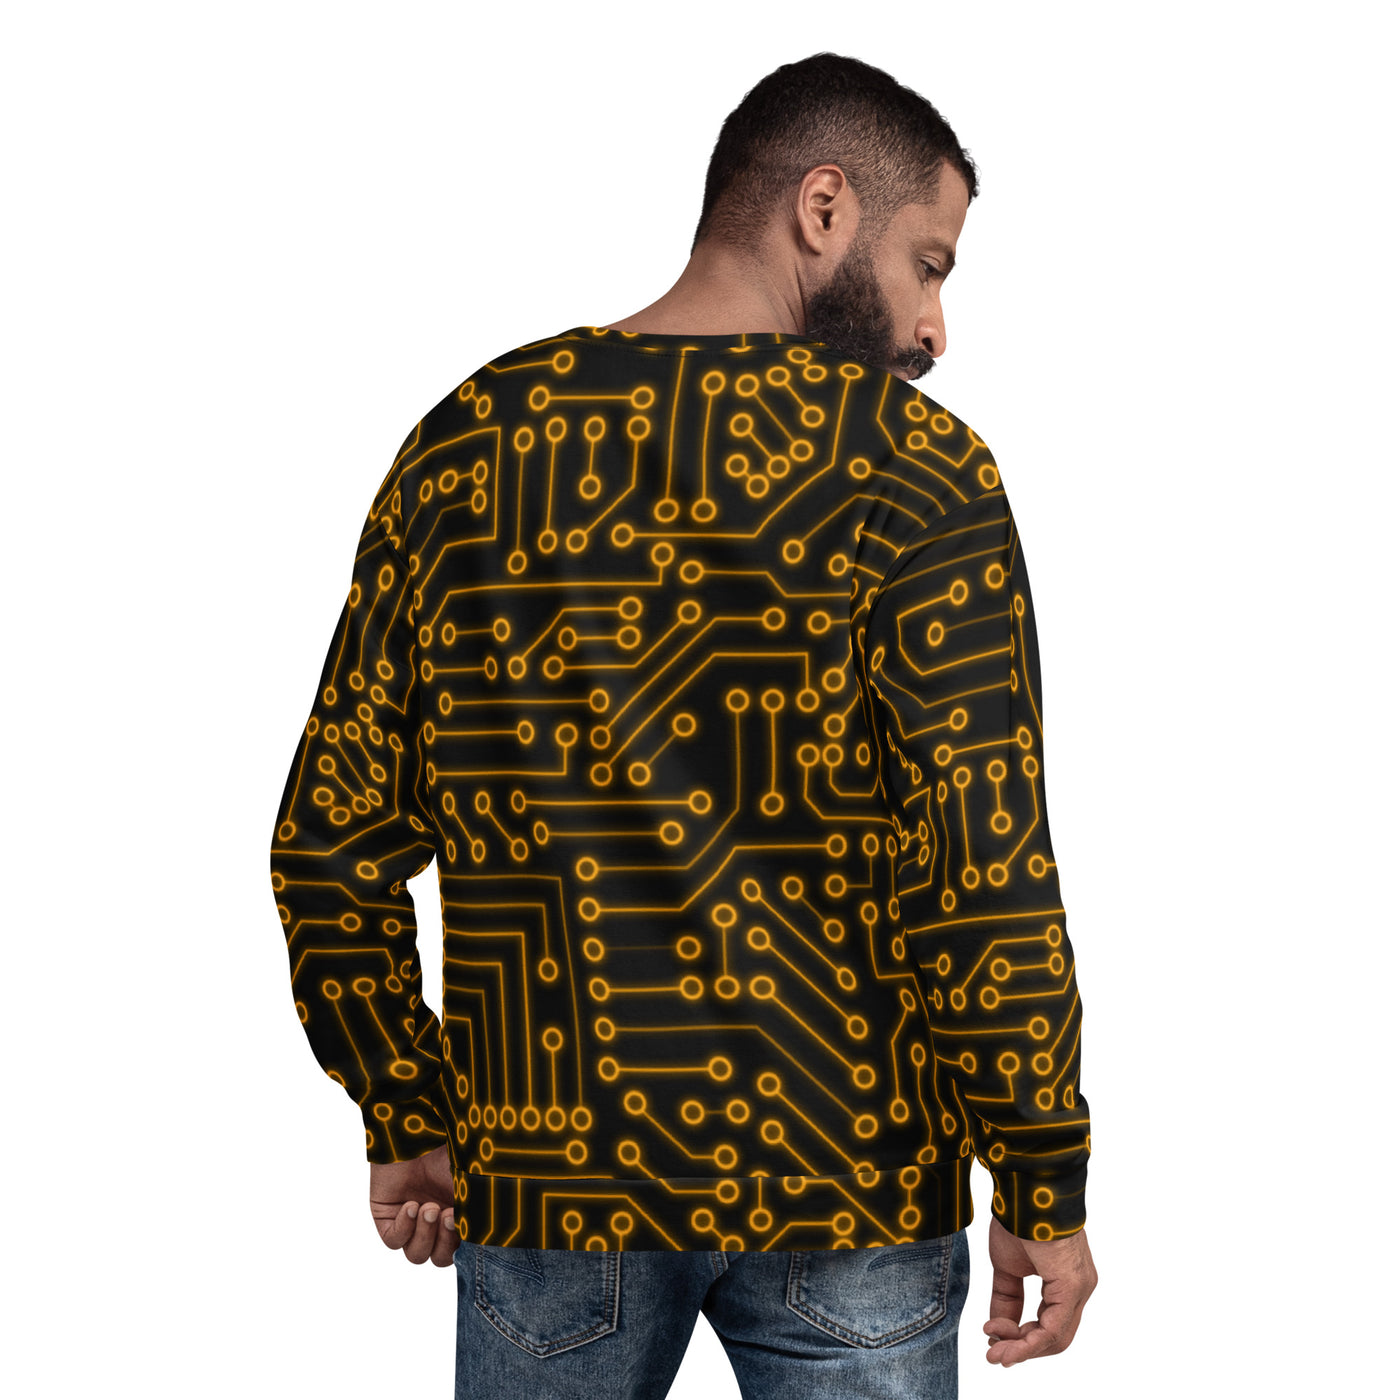 Microchip v4 - Unisex Sweatshirt